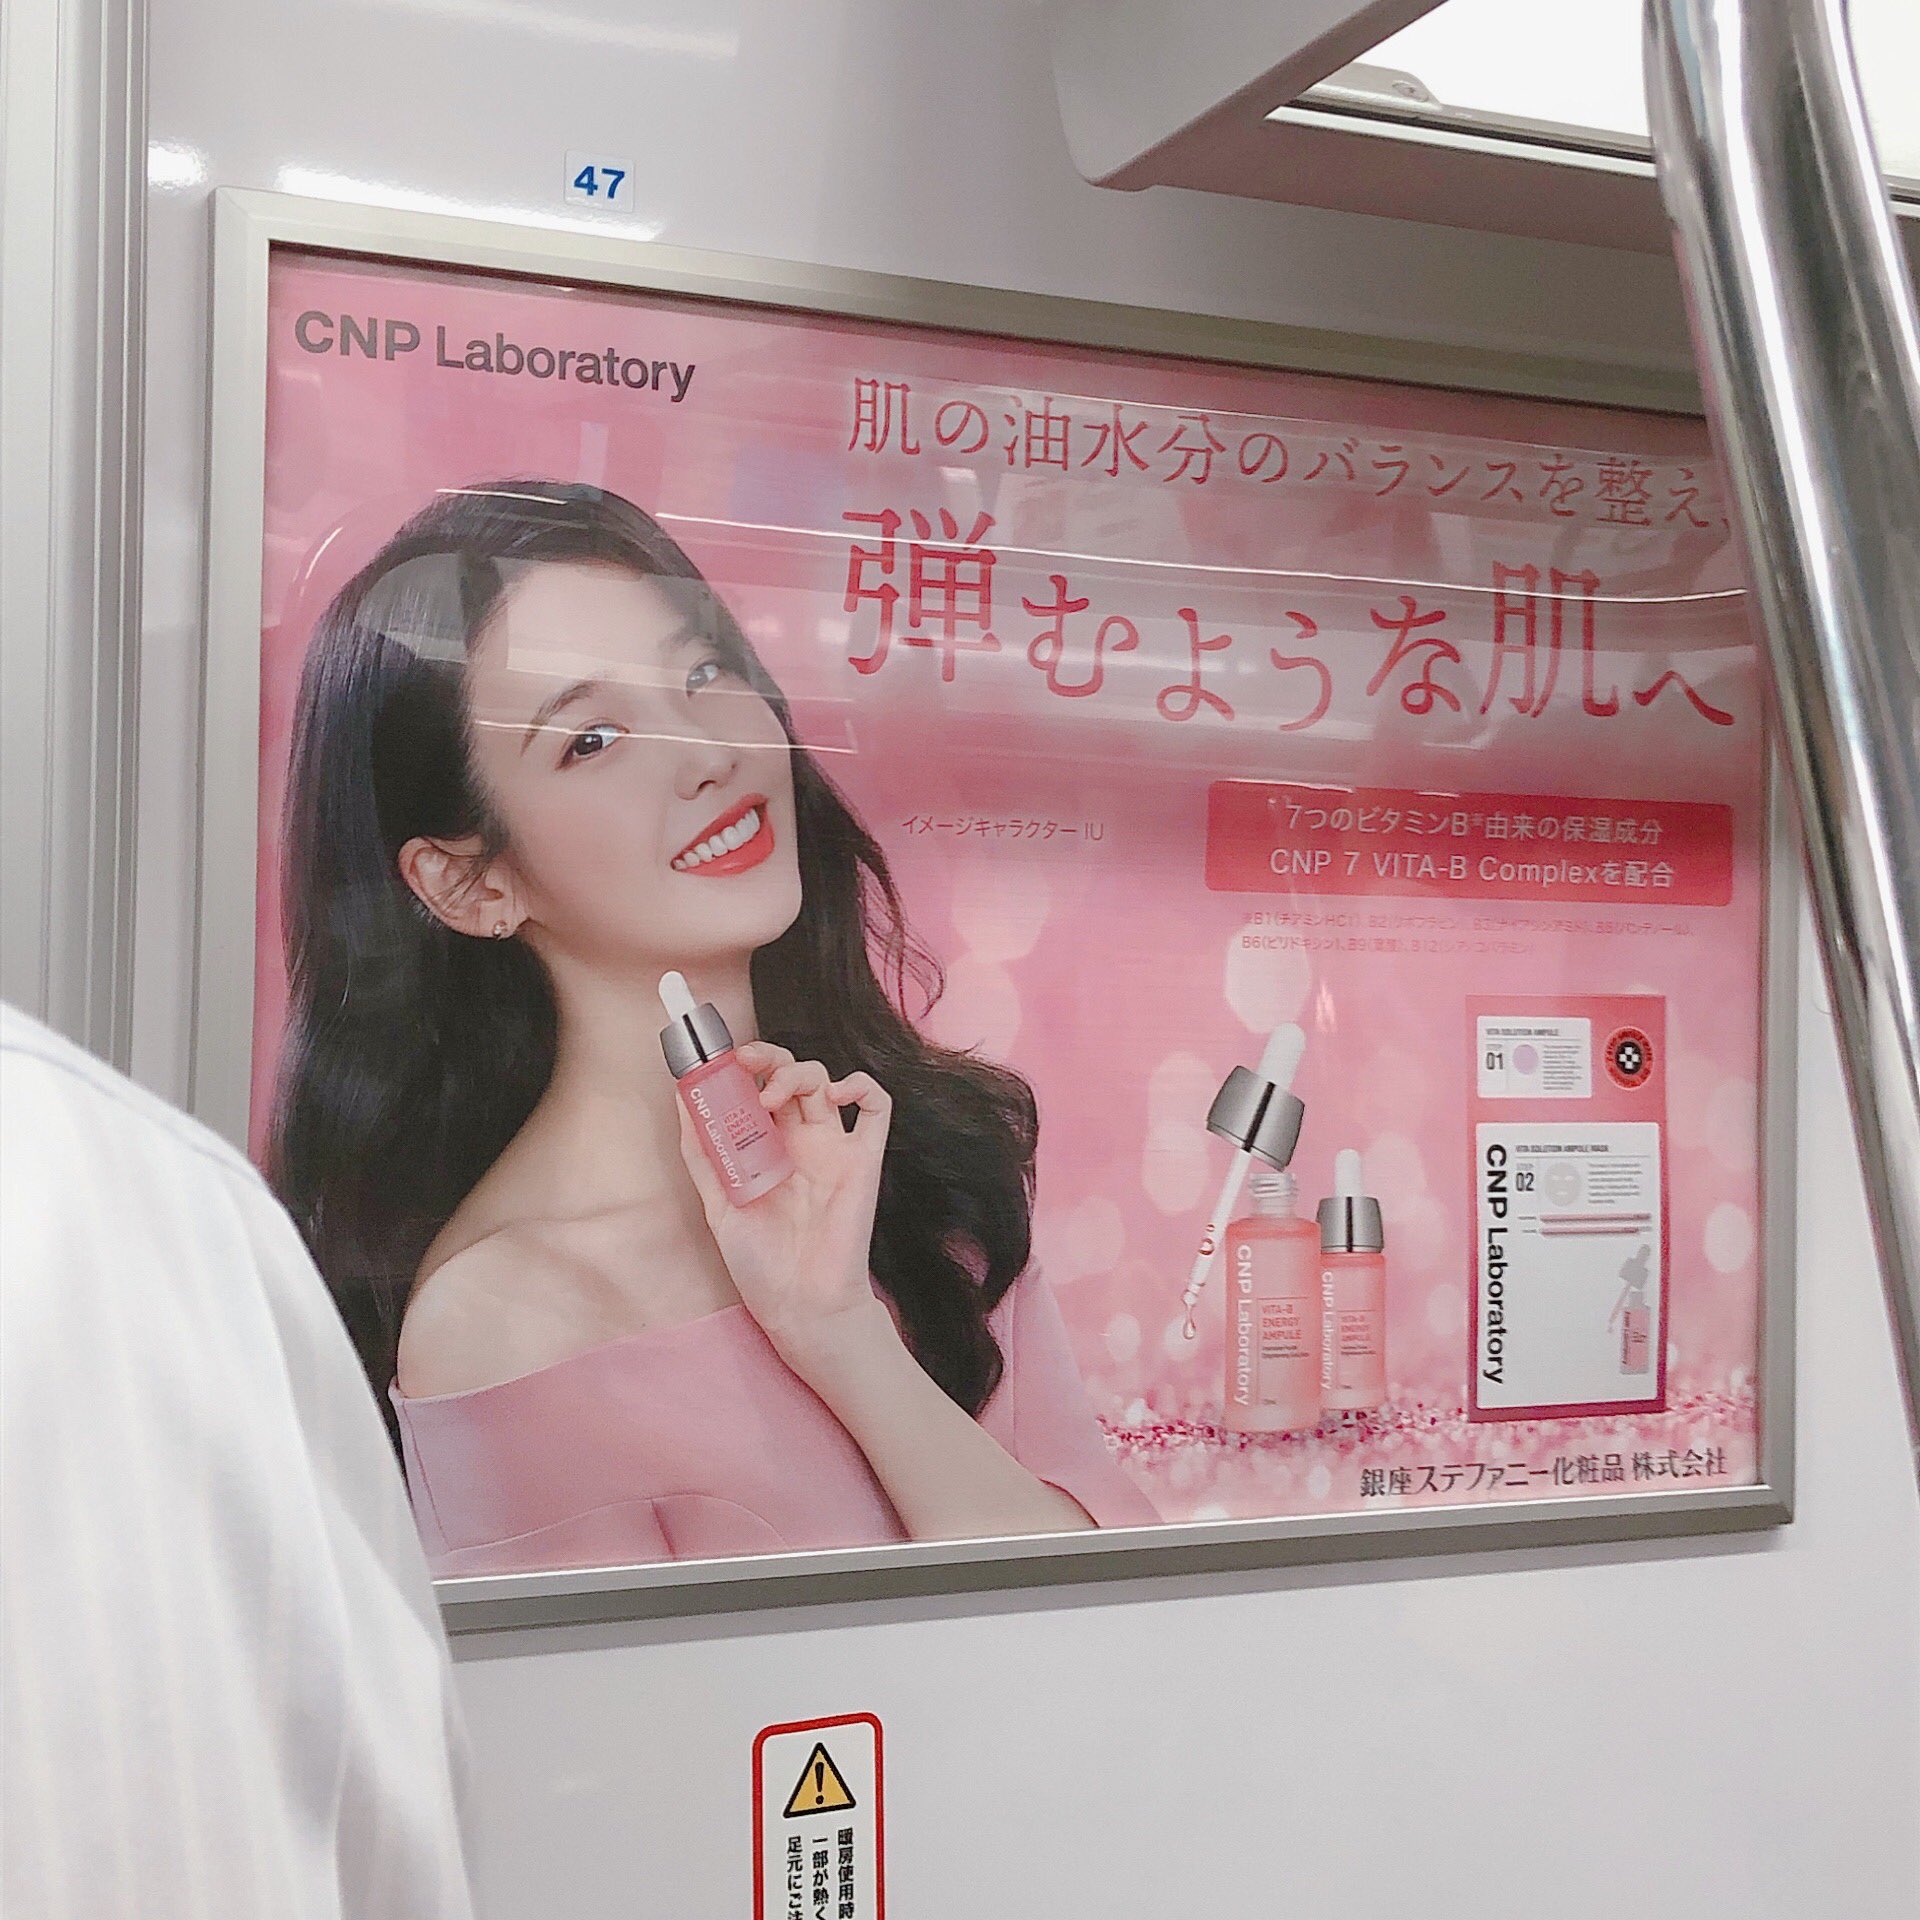 Cony 待ってるよ선호 銀座線の車内広告にiuちゃんが 日本で見られるとは 朝からいい気分 Iu Cnplaboratory 銀座ステファニー化粧品 T Co Sbrgmcdksh Twitter